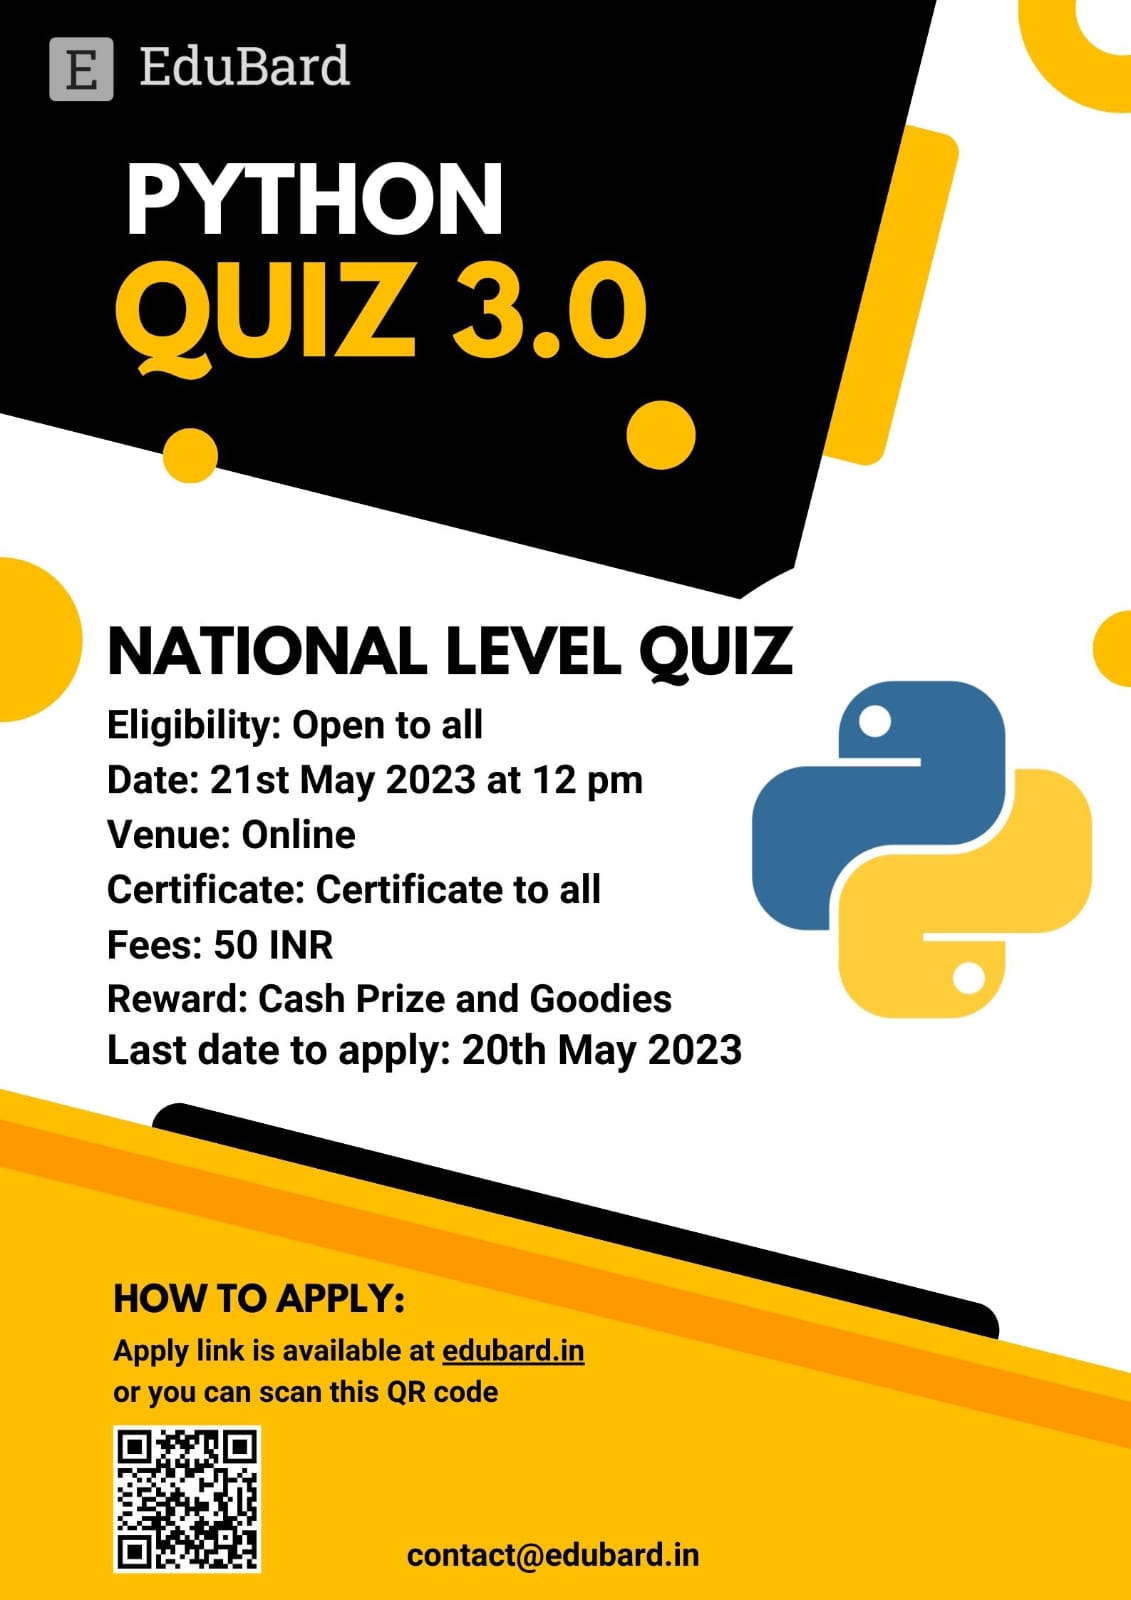 Edubard | Python Quiz 3.0: Unleash Your Python Power at the National Level! Apply Now